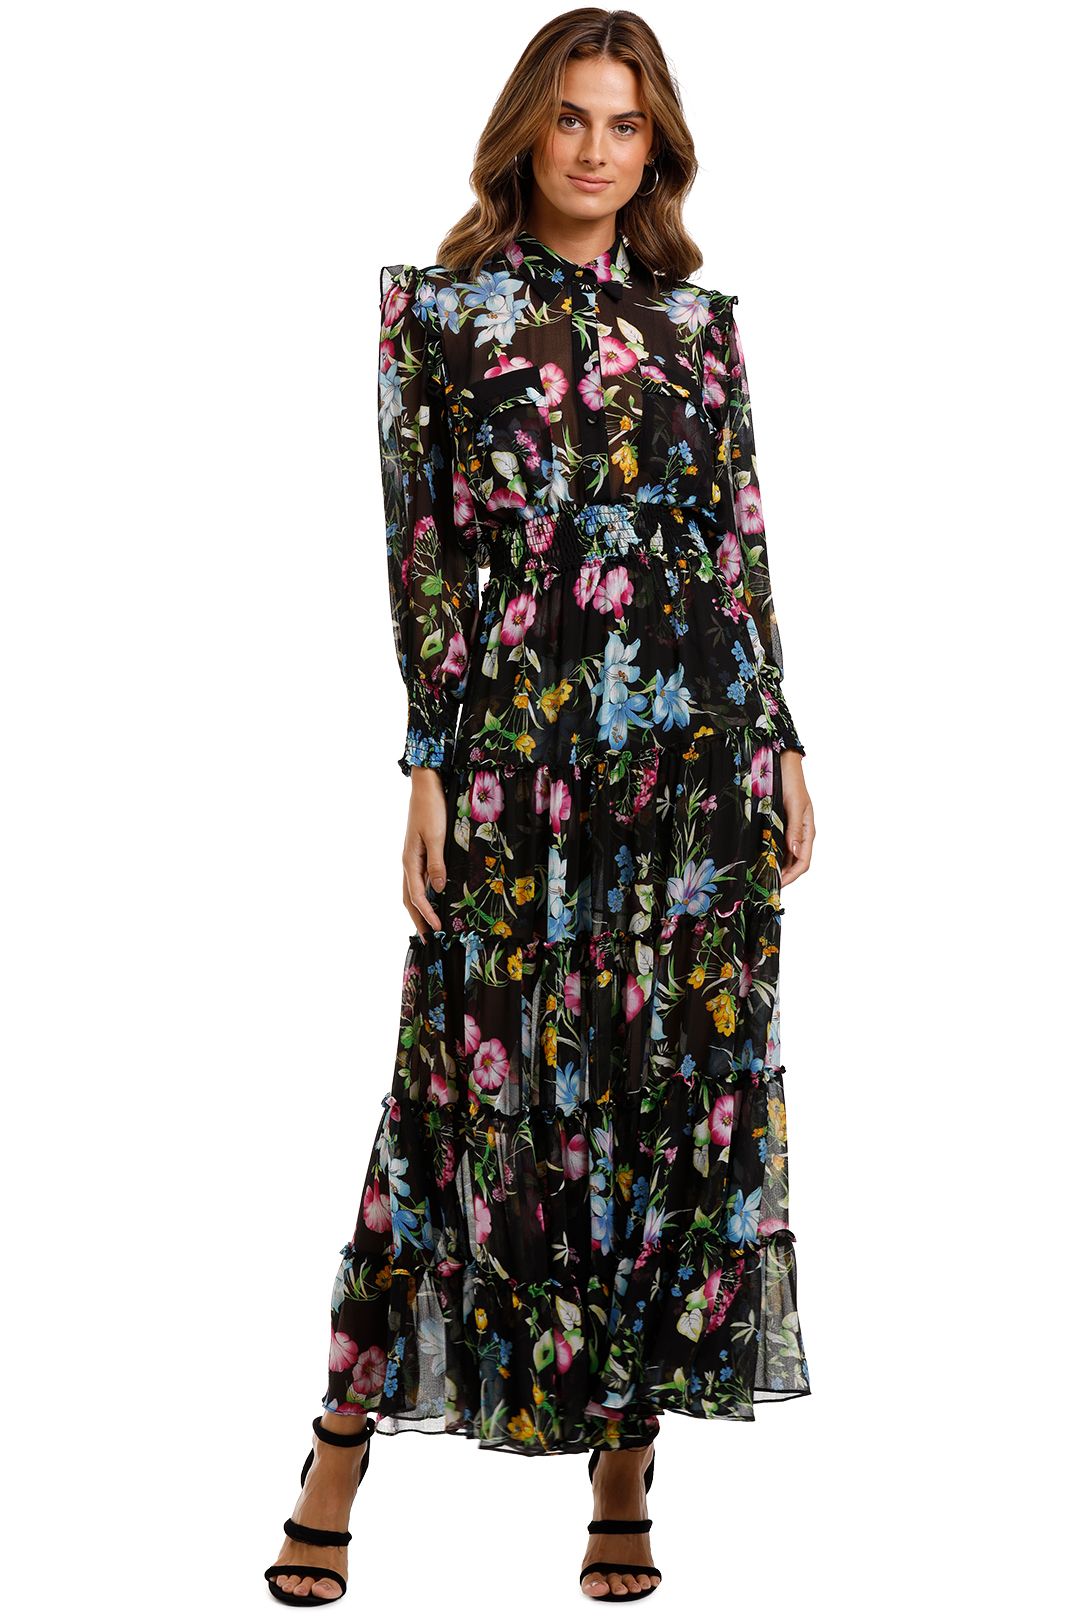 Misa LA Aydeniz Dress dark floral print